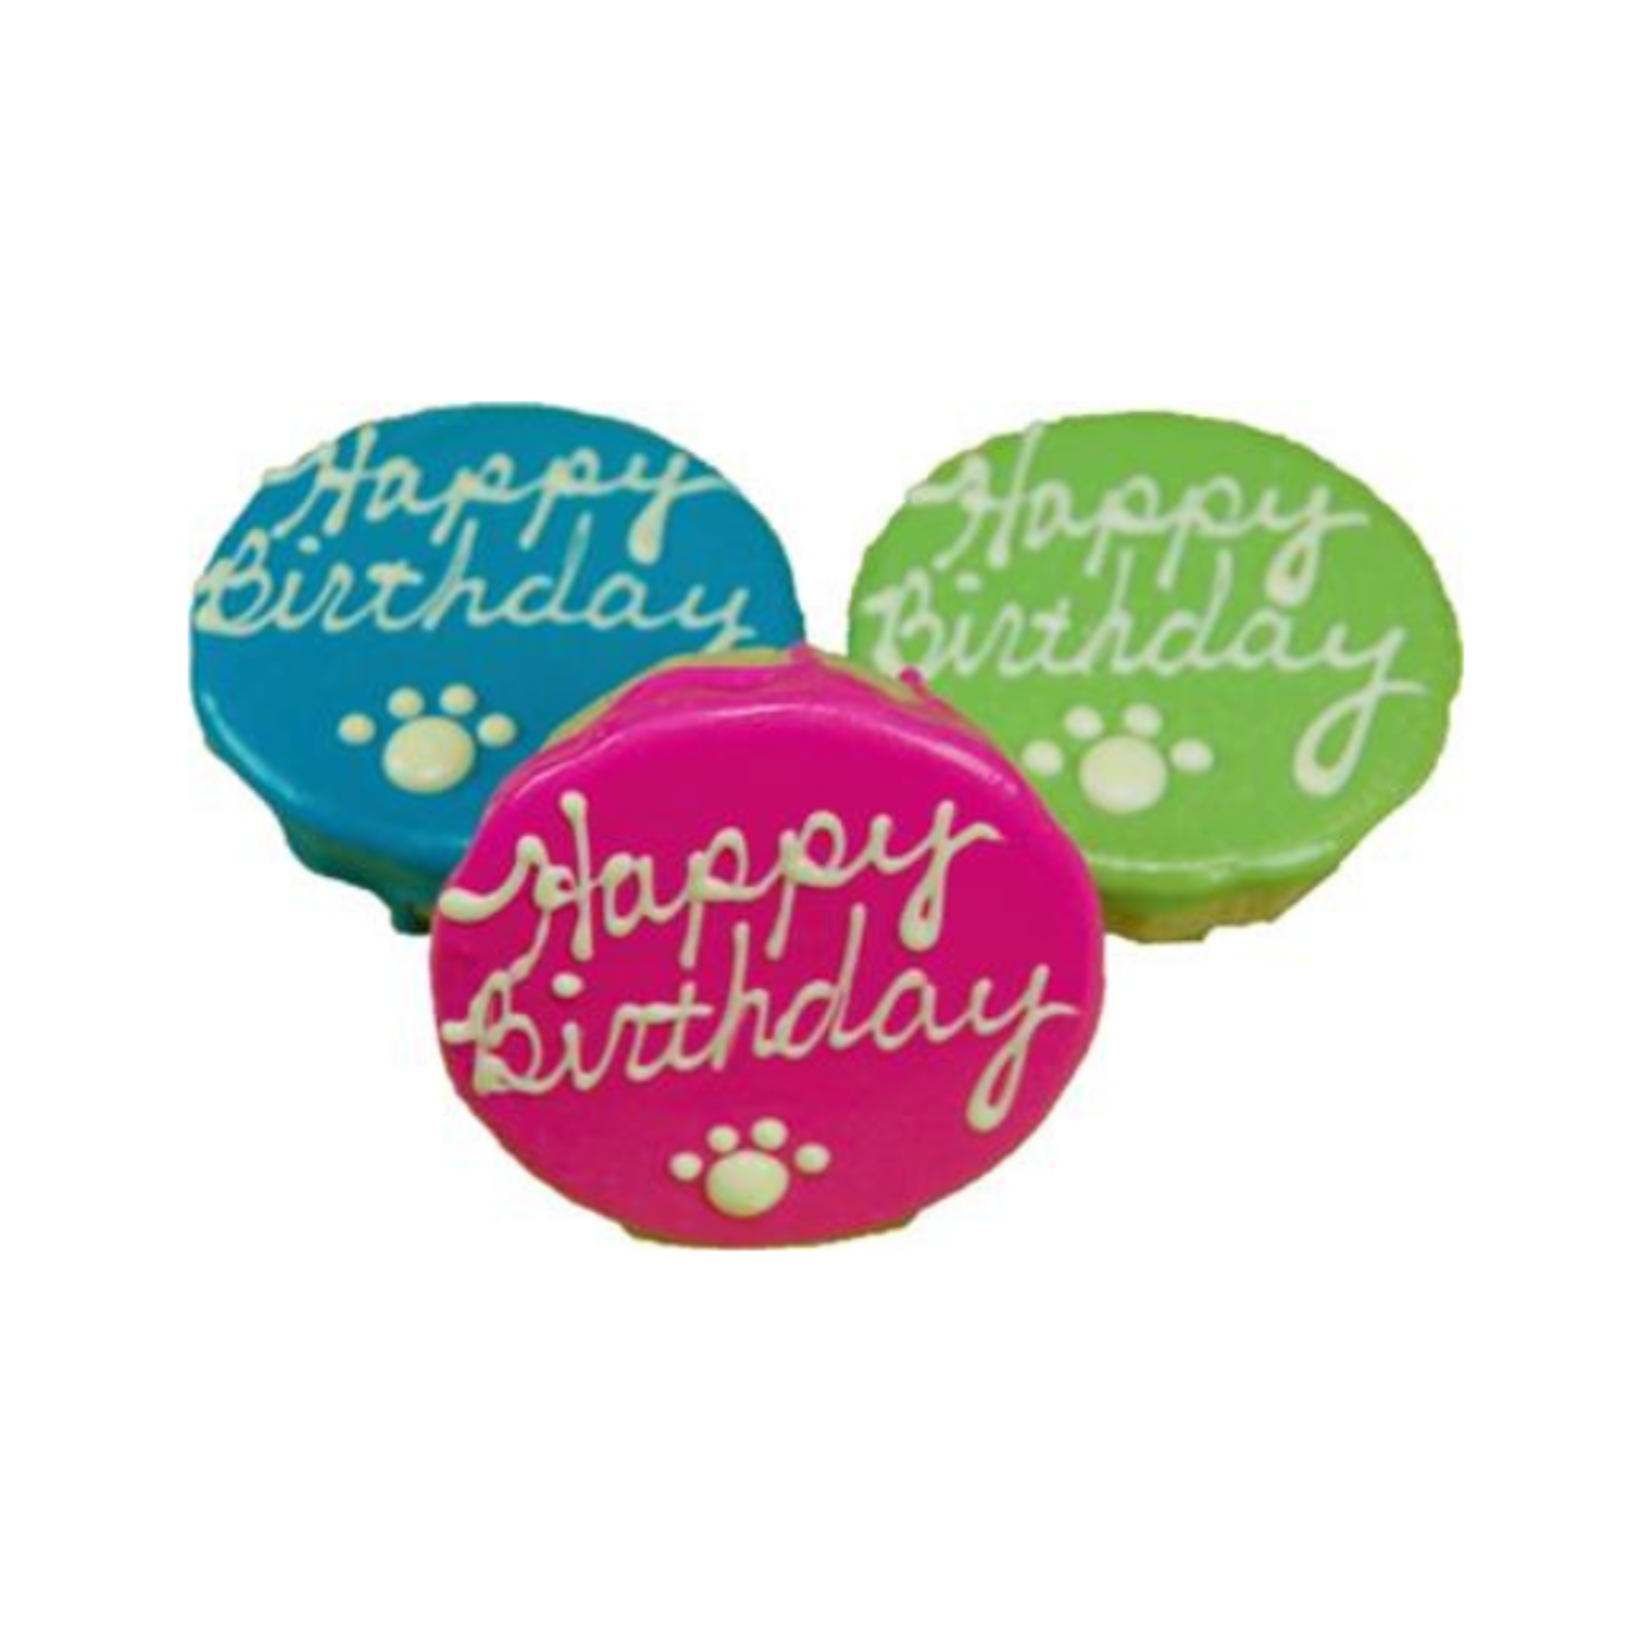 https://cdn.shoplightspeed.com/shops/656173/files/46171611/1652x1652x2/preppy-puppy-preppy-puppy-cookie-birthday-bundt-ca.jpg